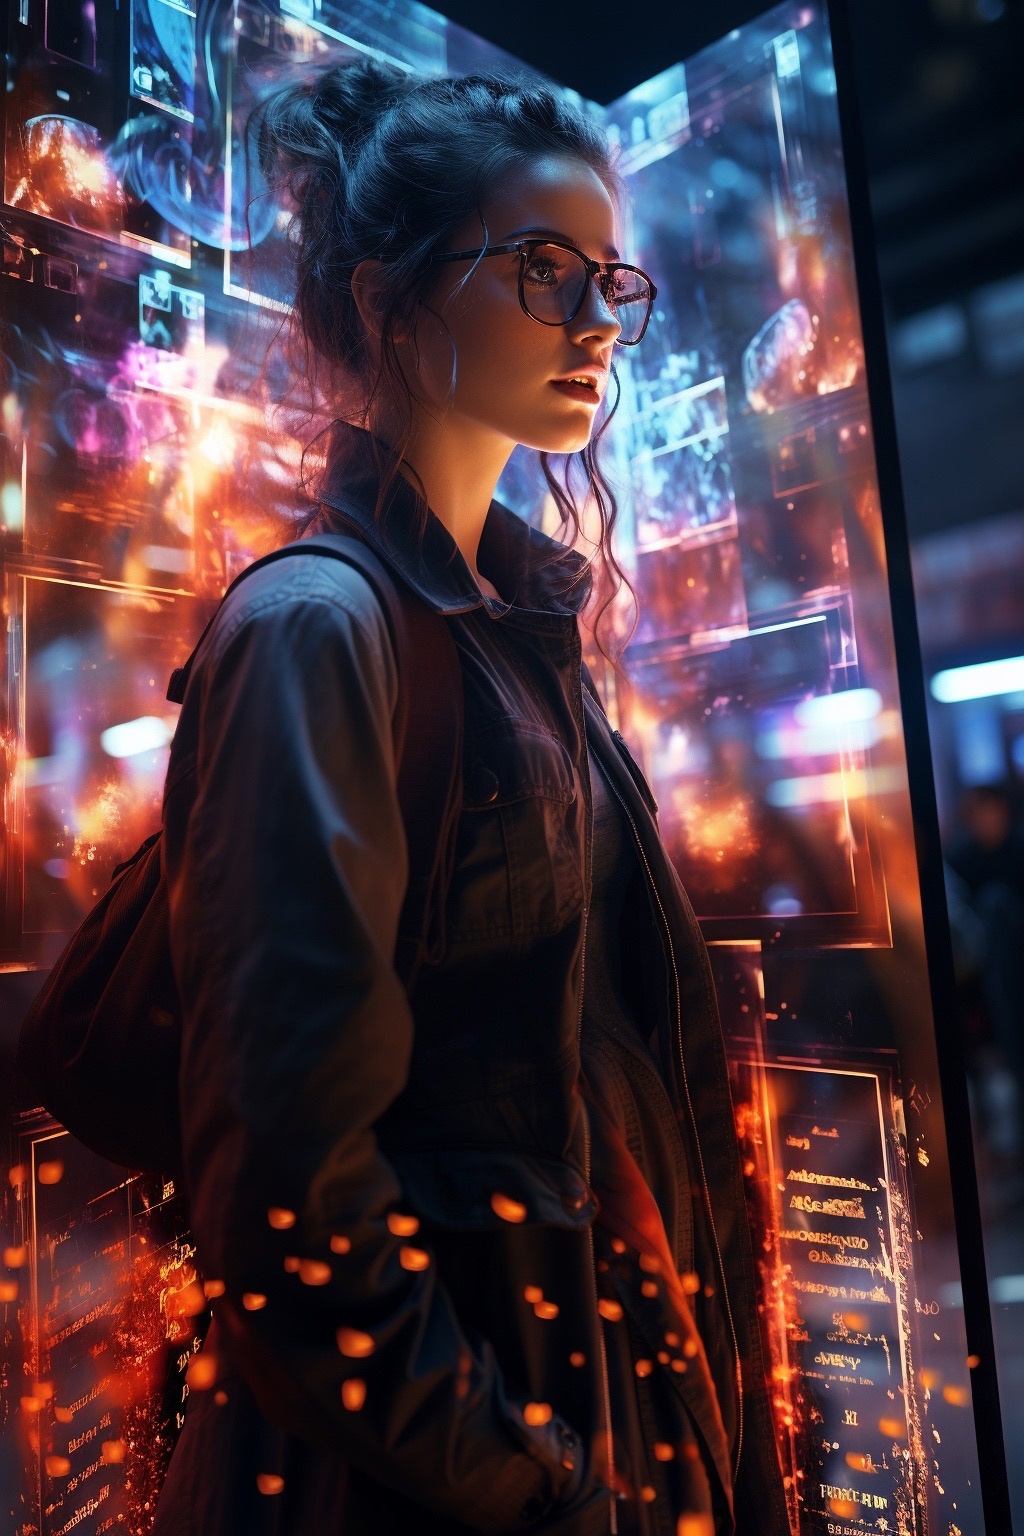 General 1024x1536 Andy Goodlight AI art women science fiction cyberpunk hairbun backpacks glasses portrait display digital art looking away standing jacket